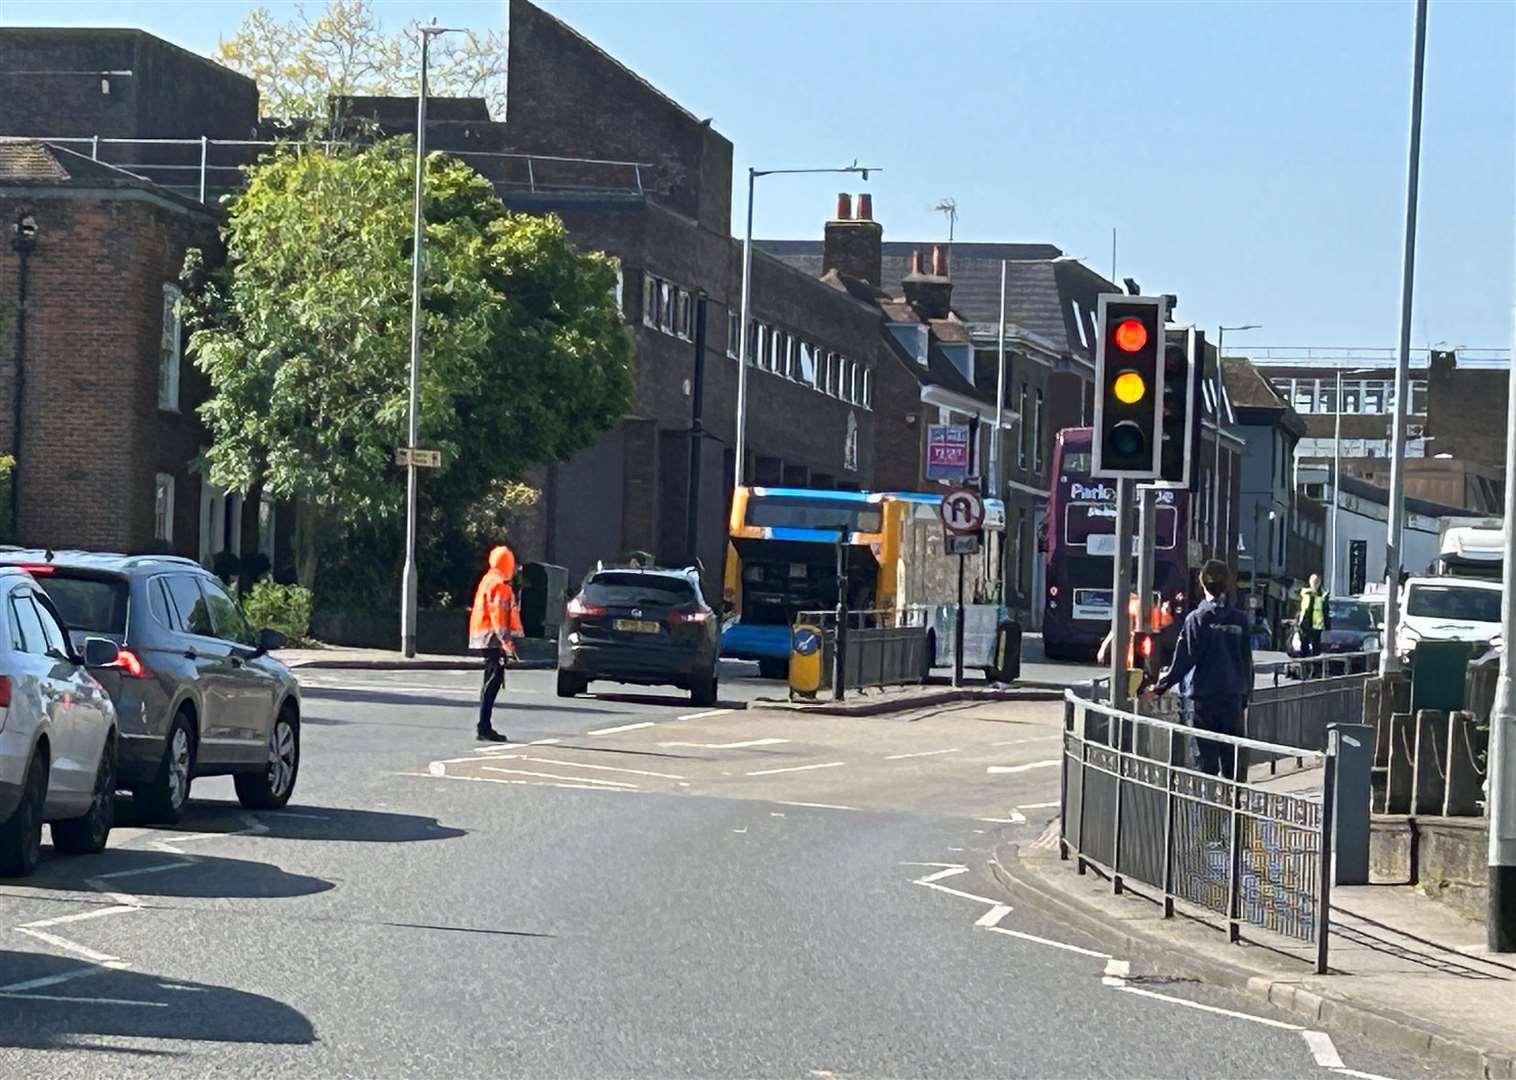 A broken-down bus in Lower Bridge Street, Canterbury, has caused widespread gridlock in the city